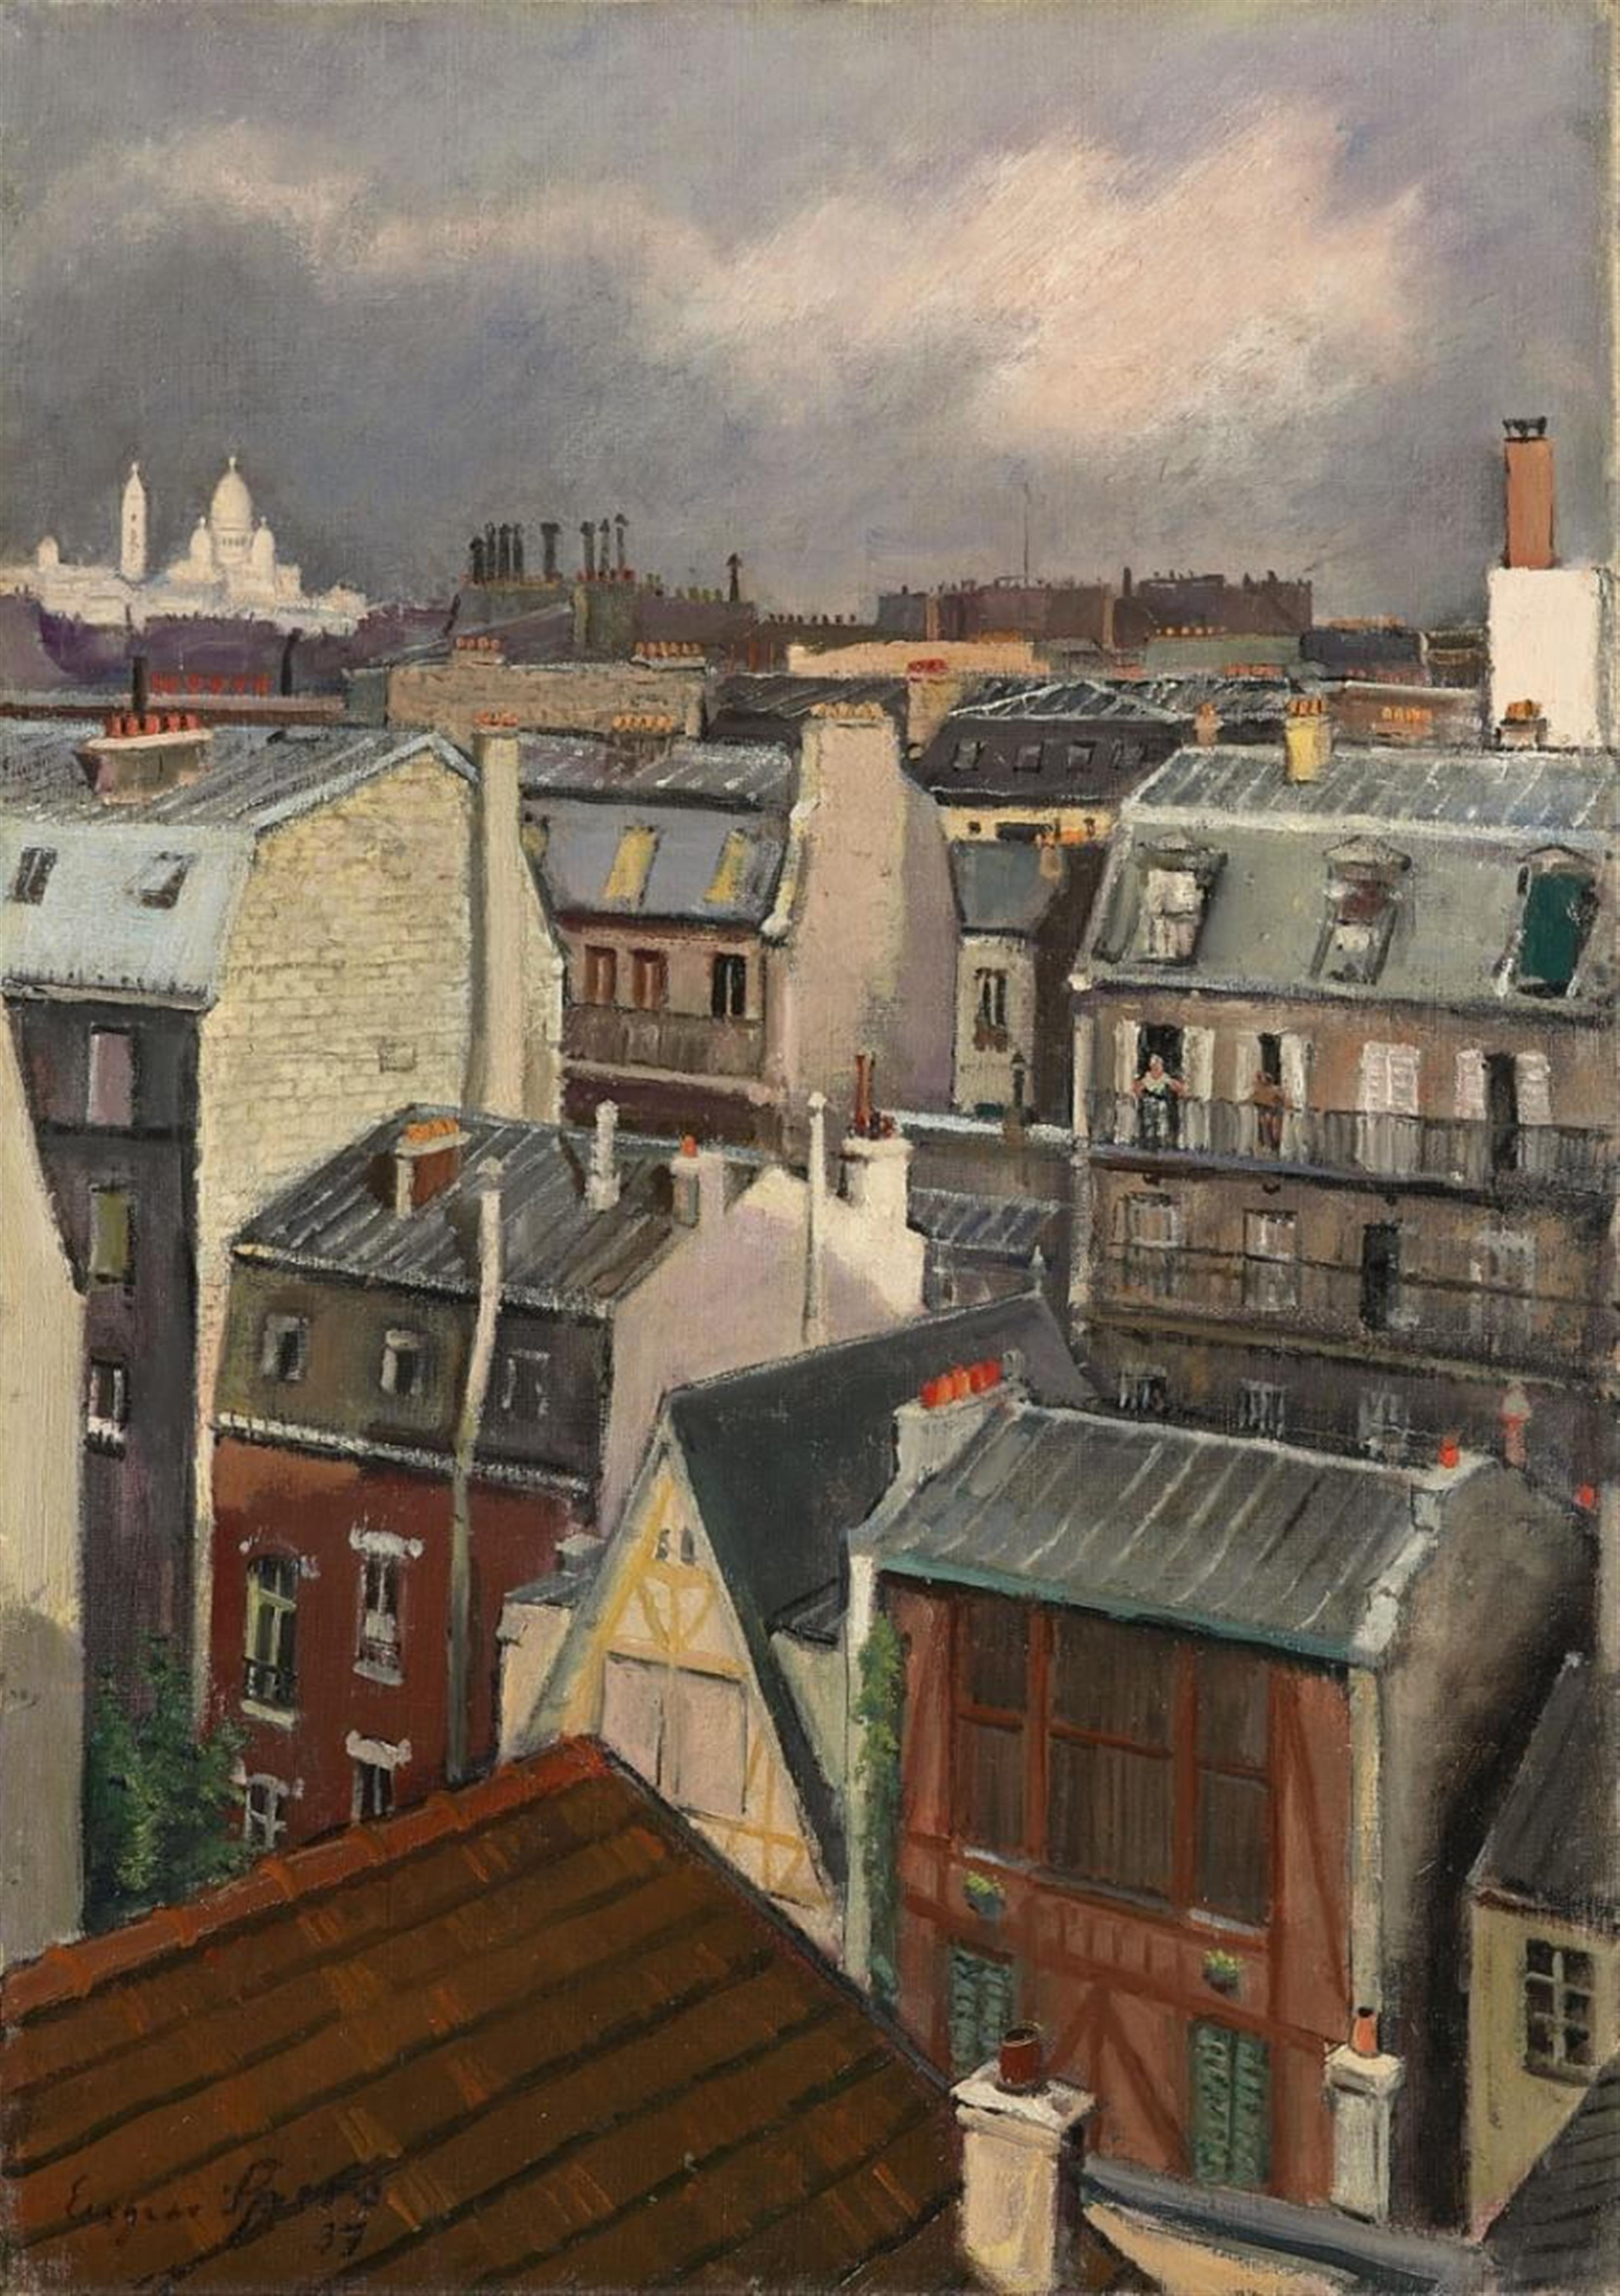 Eugen Spiro - Dächer in Paris (Roofs in Paris) - image-1